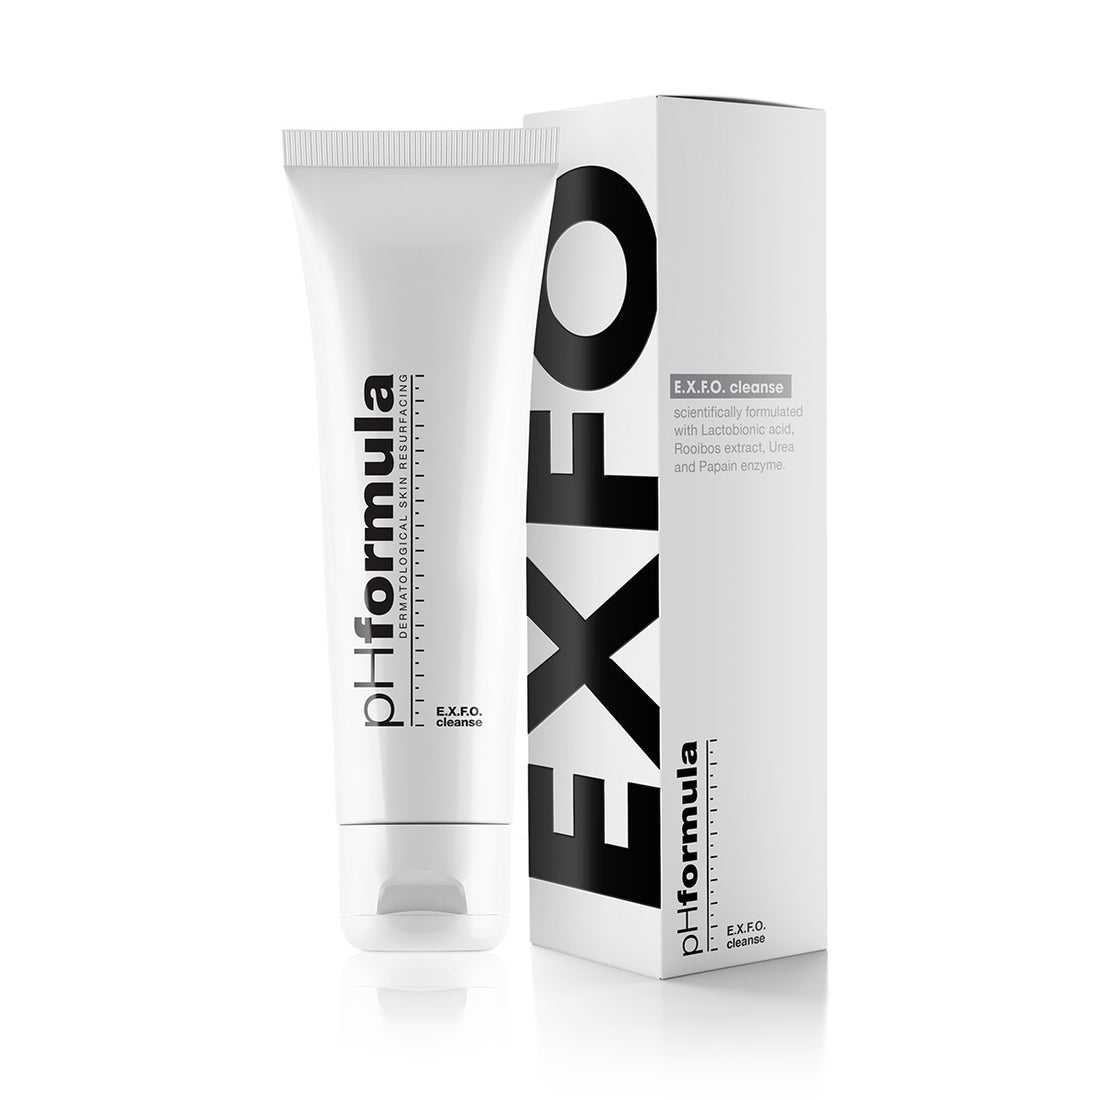 pHformula קלינס אקספו - E. X. F. O. CLEANSE